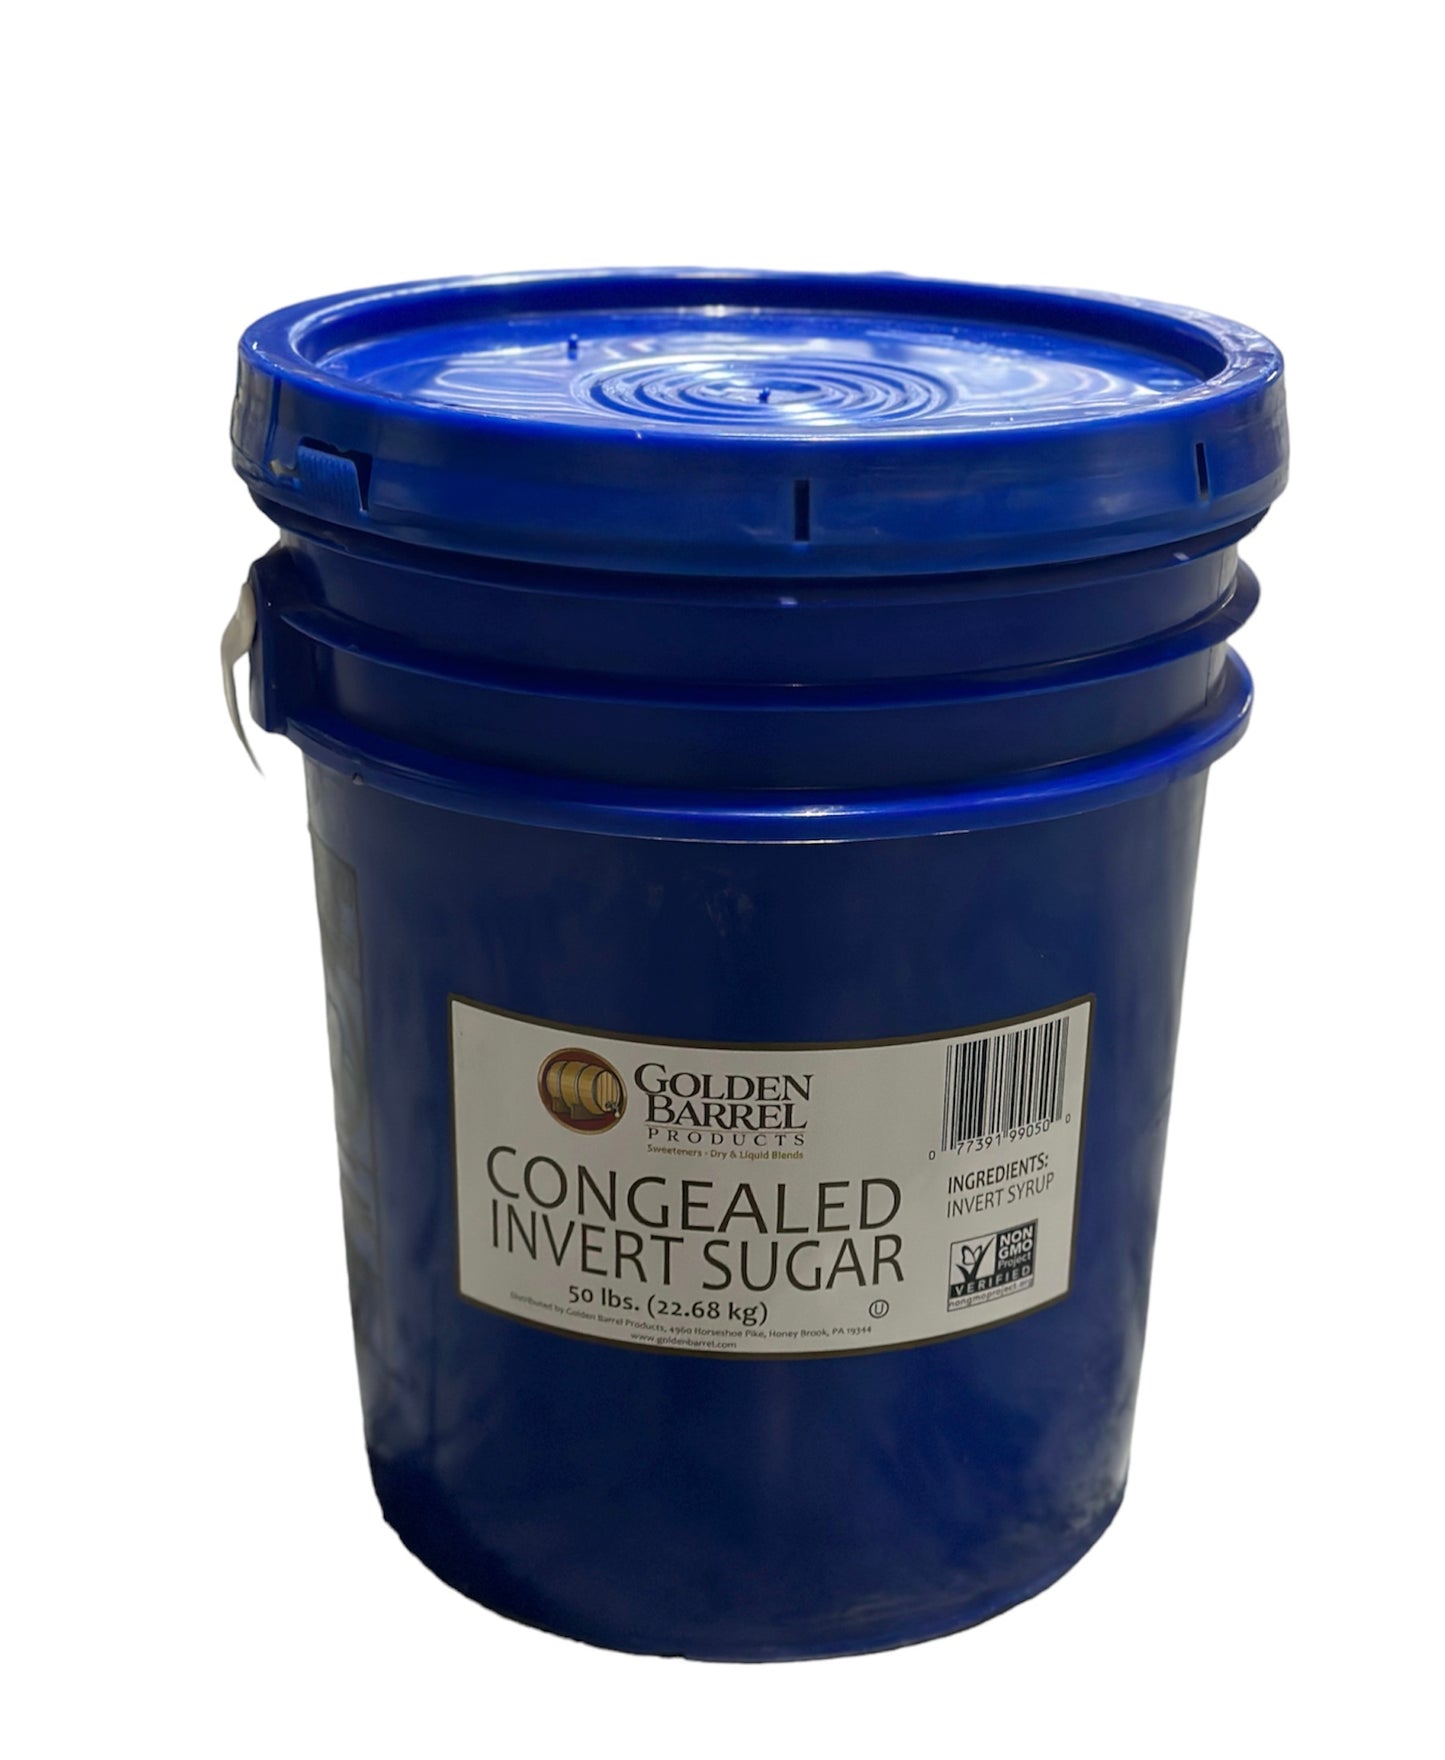 Golden Barrel Invert Sugar #50